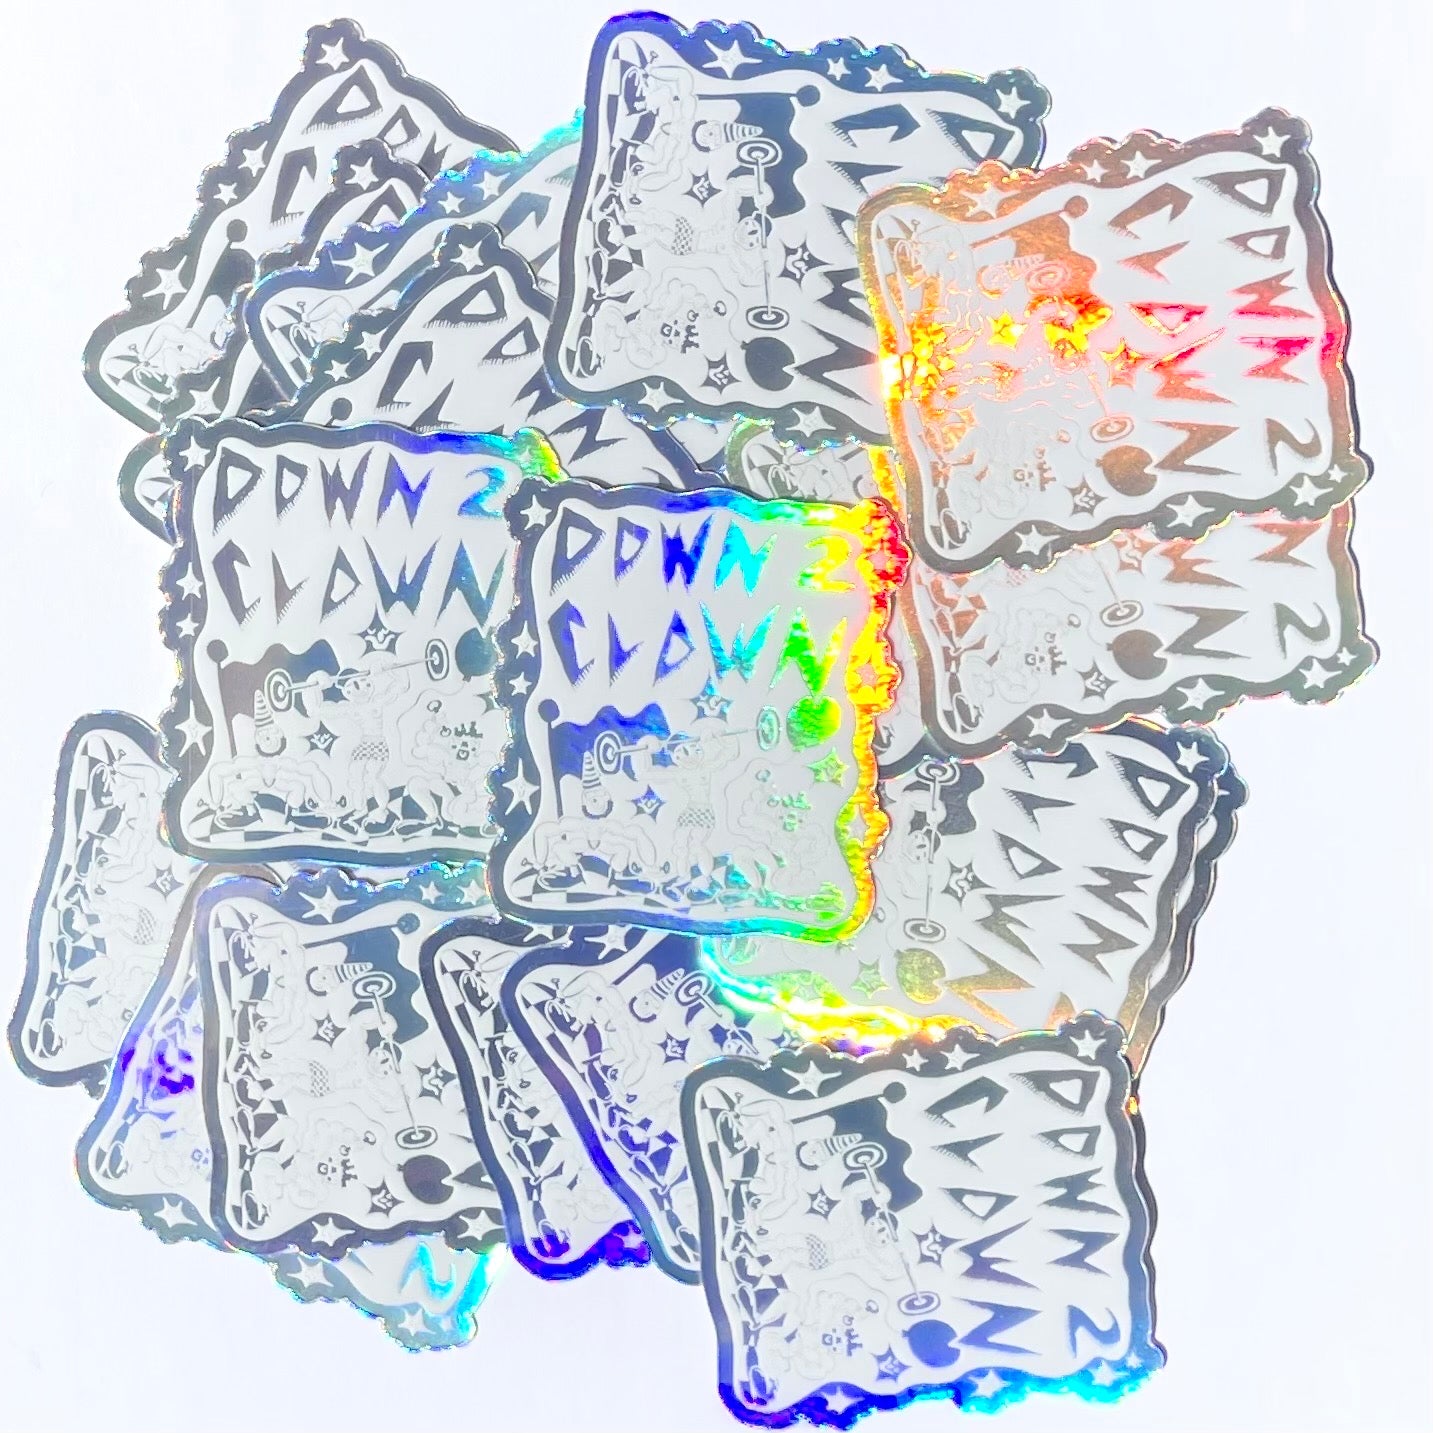 Hologram Down 2 Clown Sticker